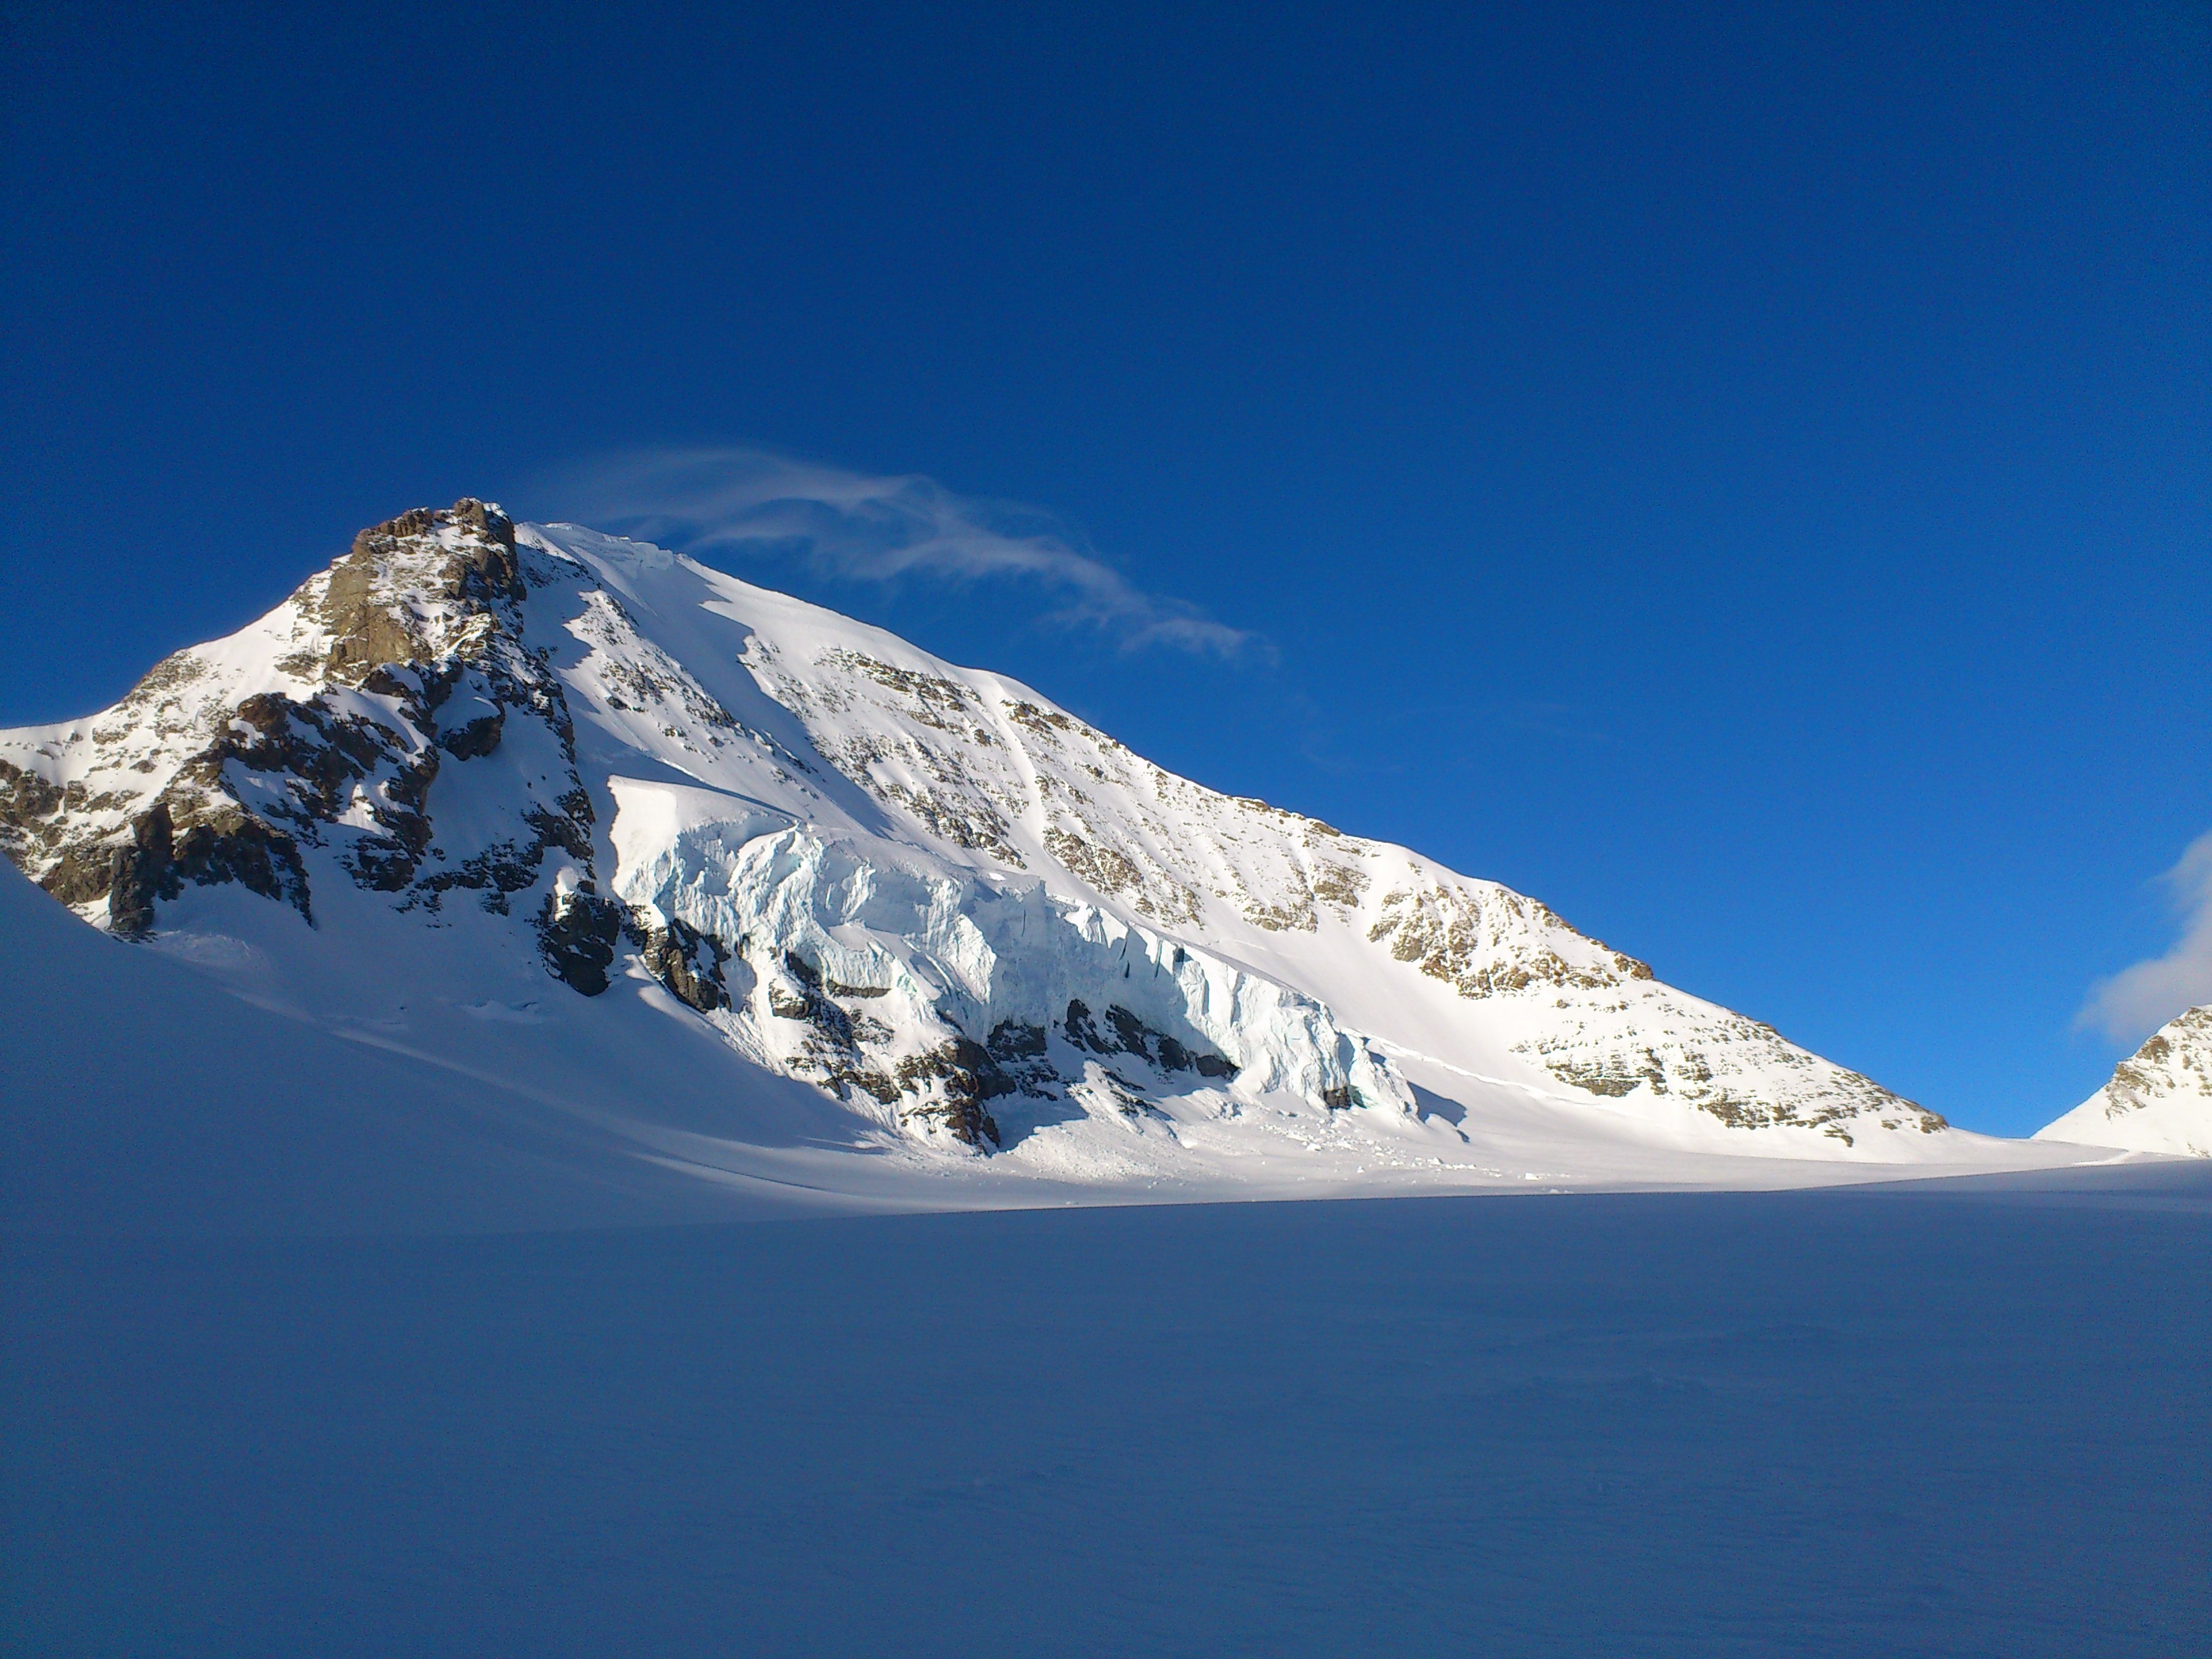 Manaslu 2015: A scientific expedition at over 5,000 m altitude